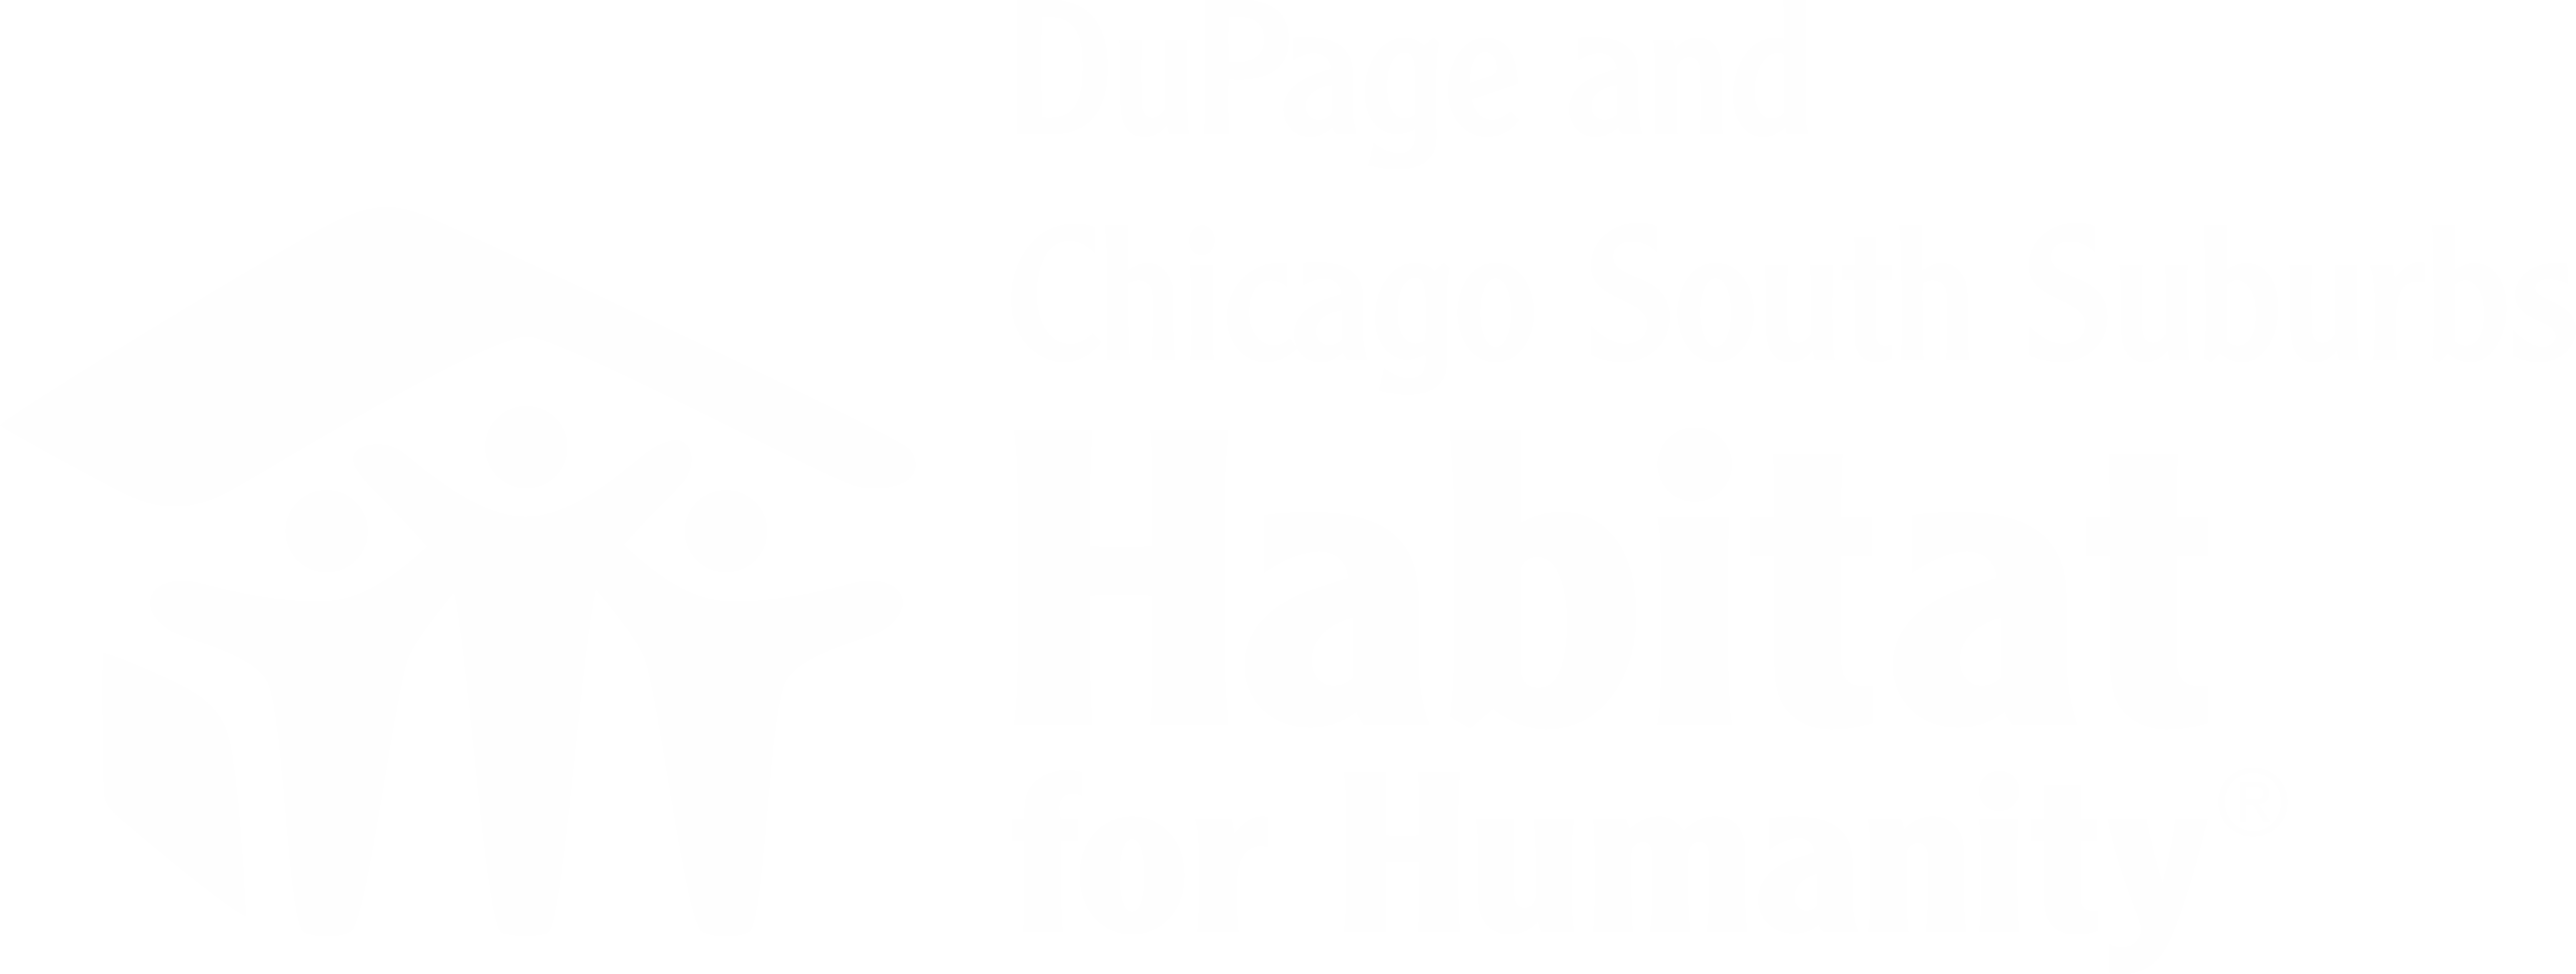 DuPage Habitat for Humanity